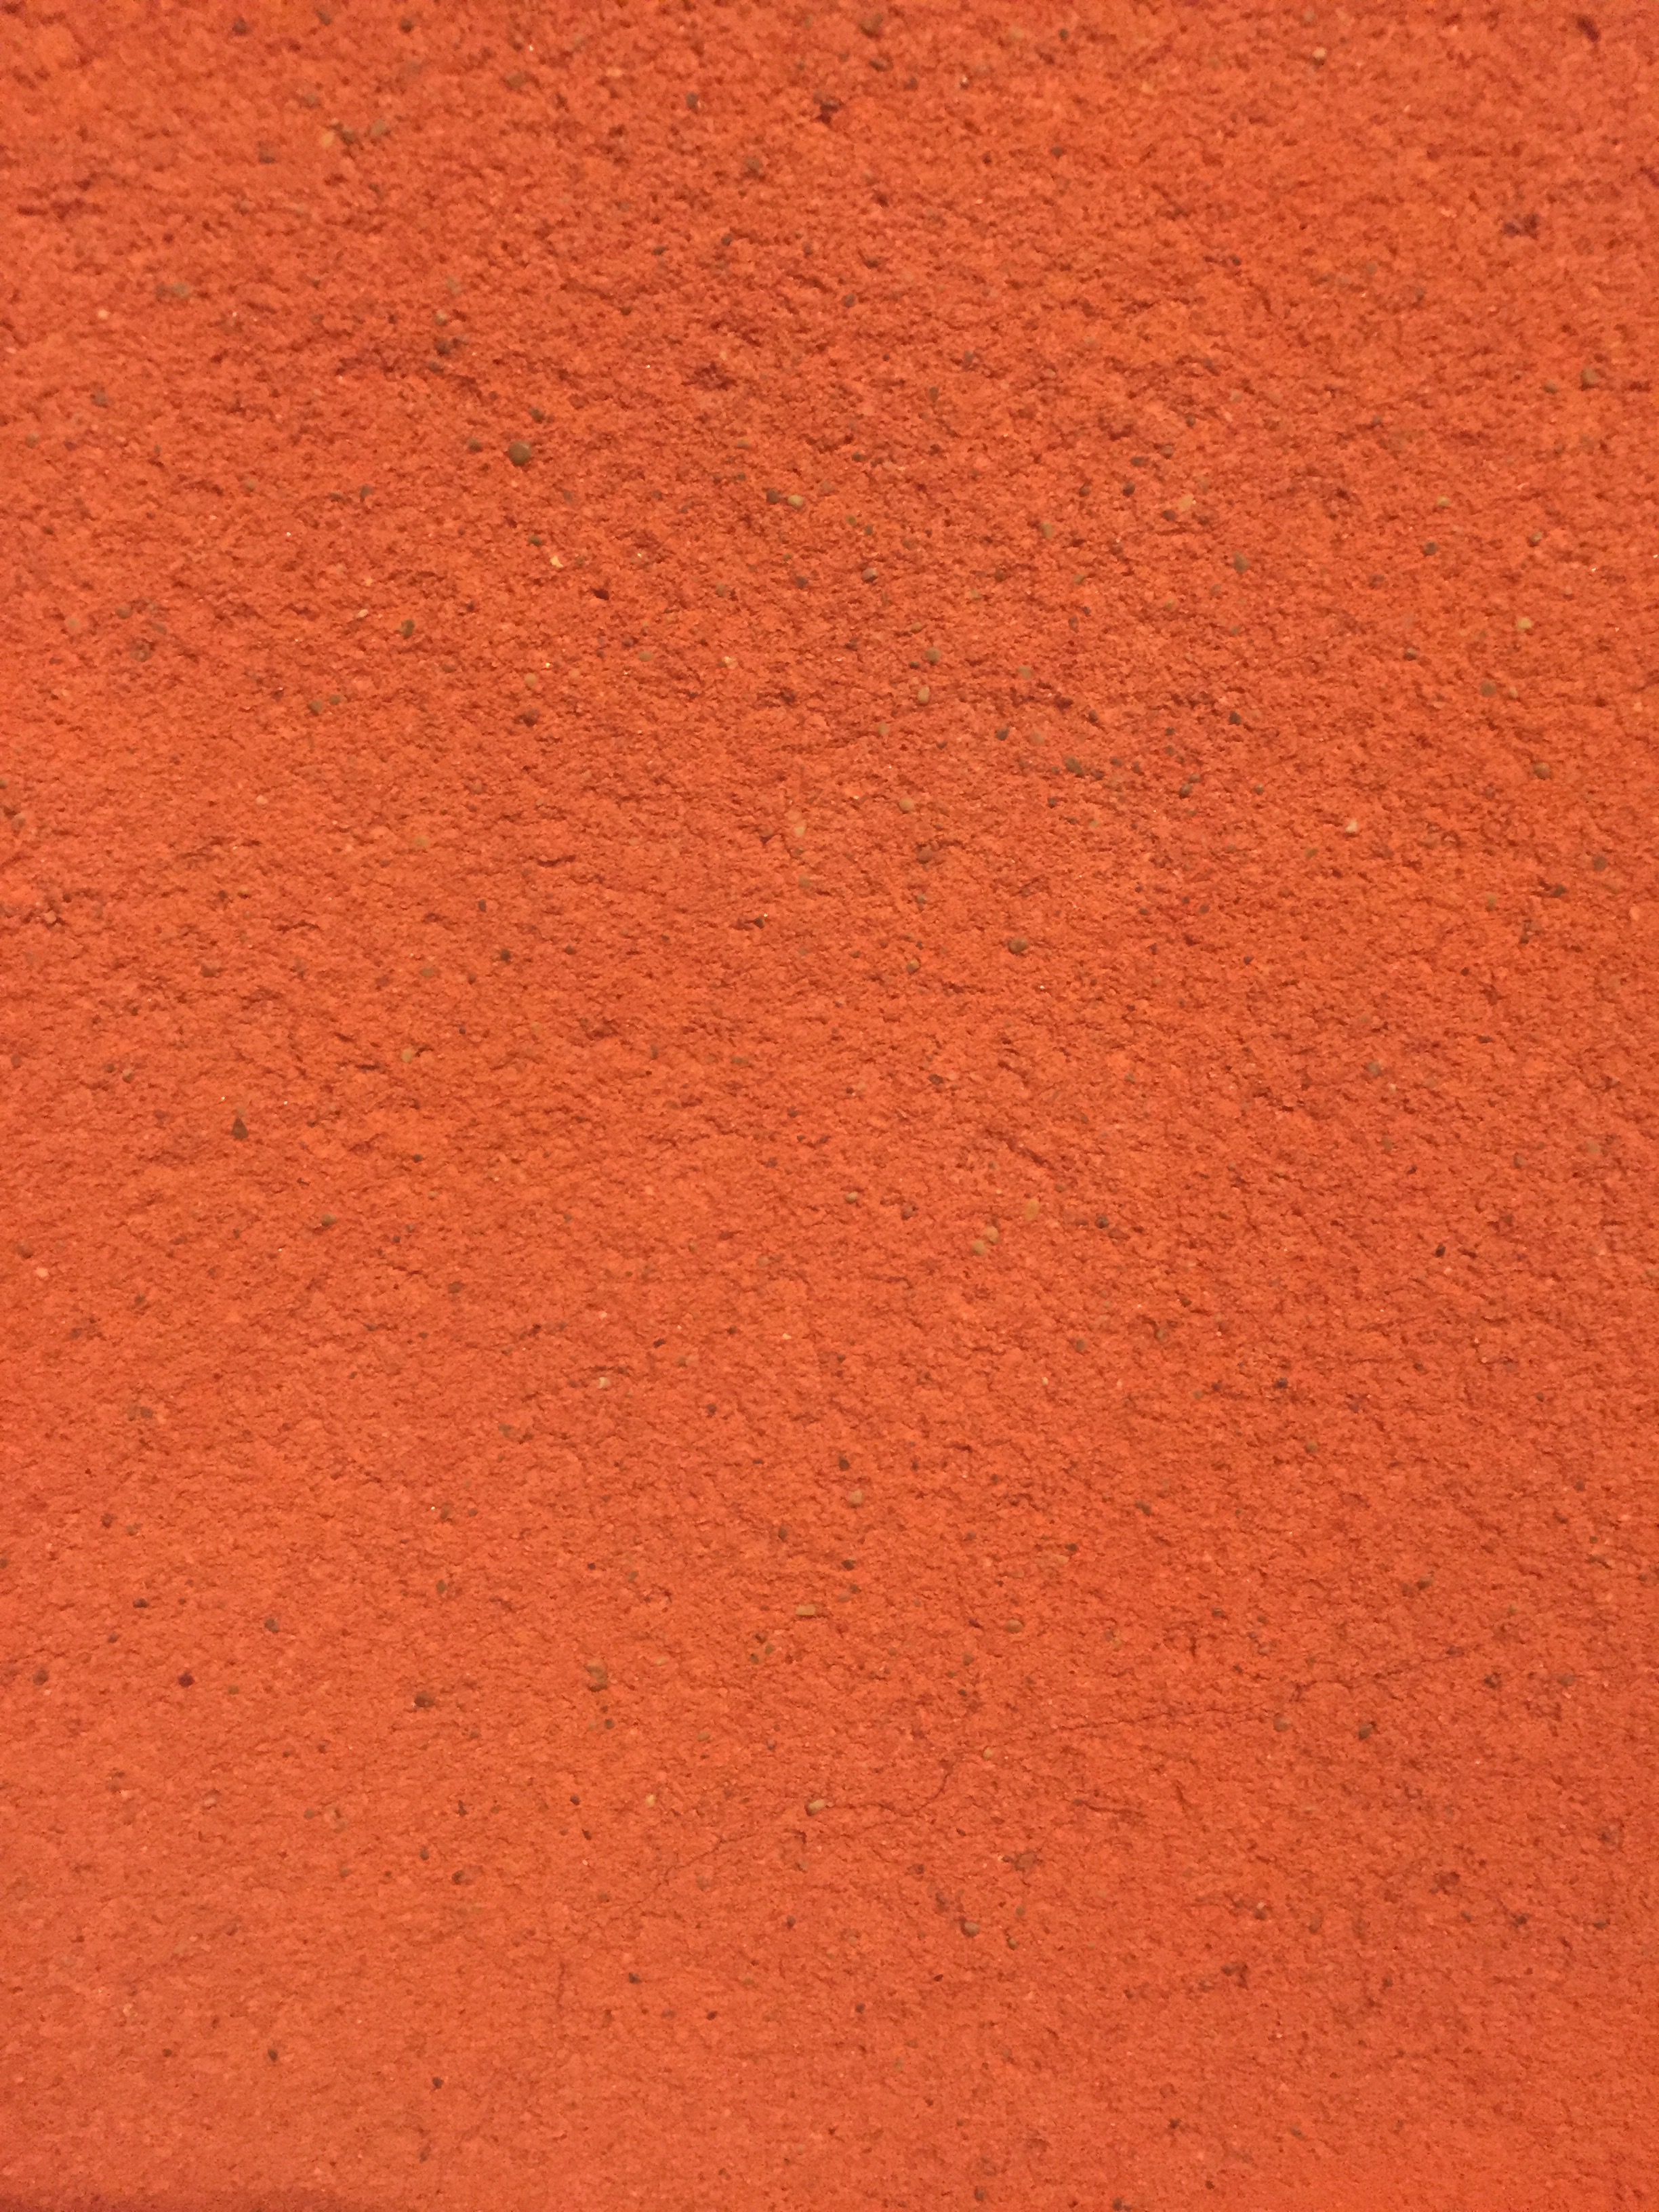 Orange Texture Seamless